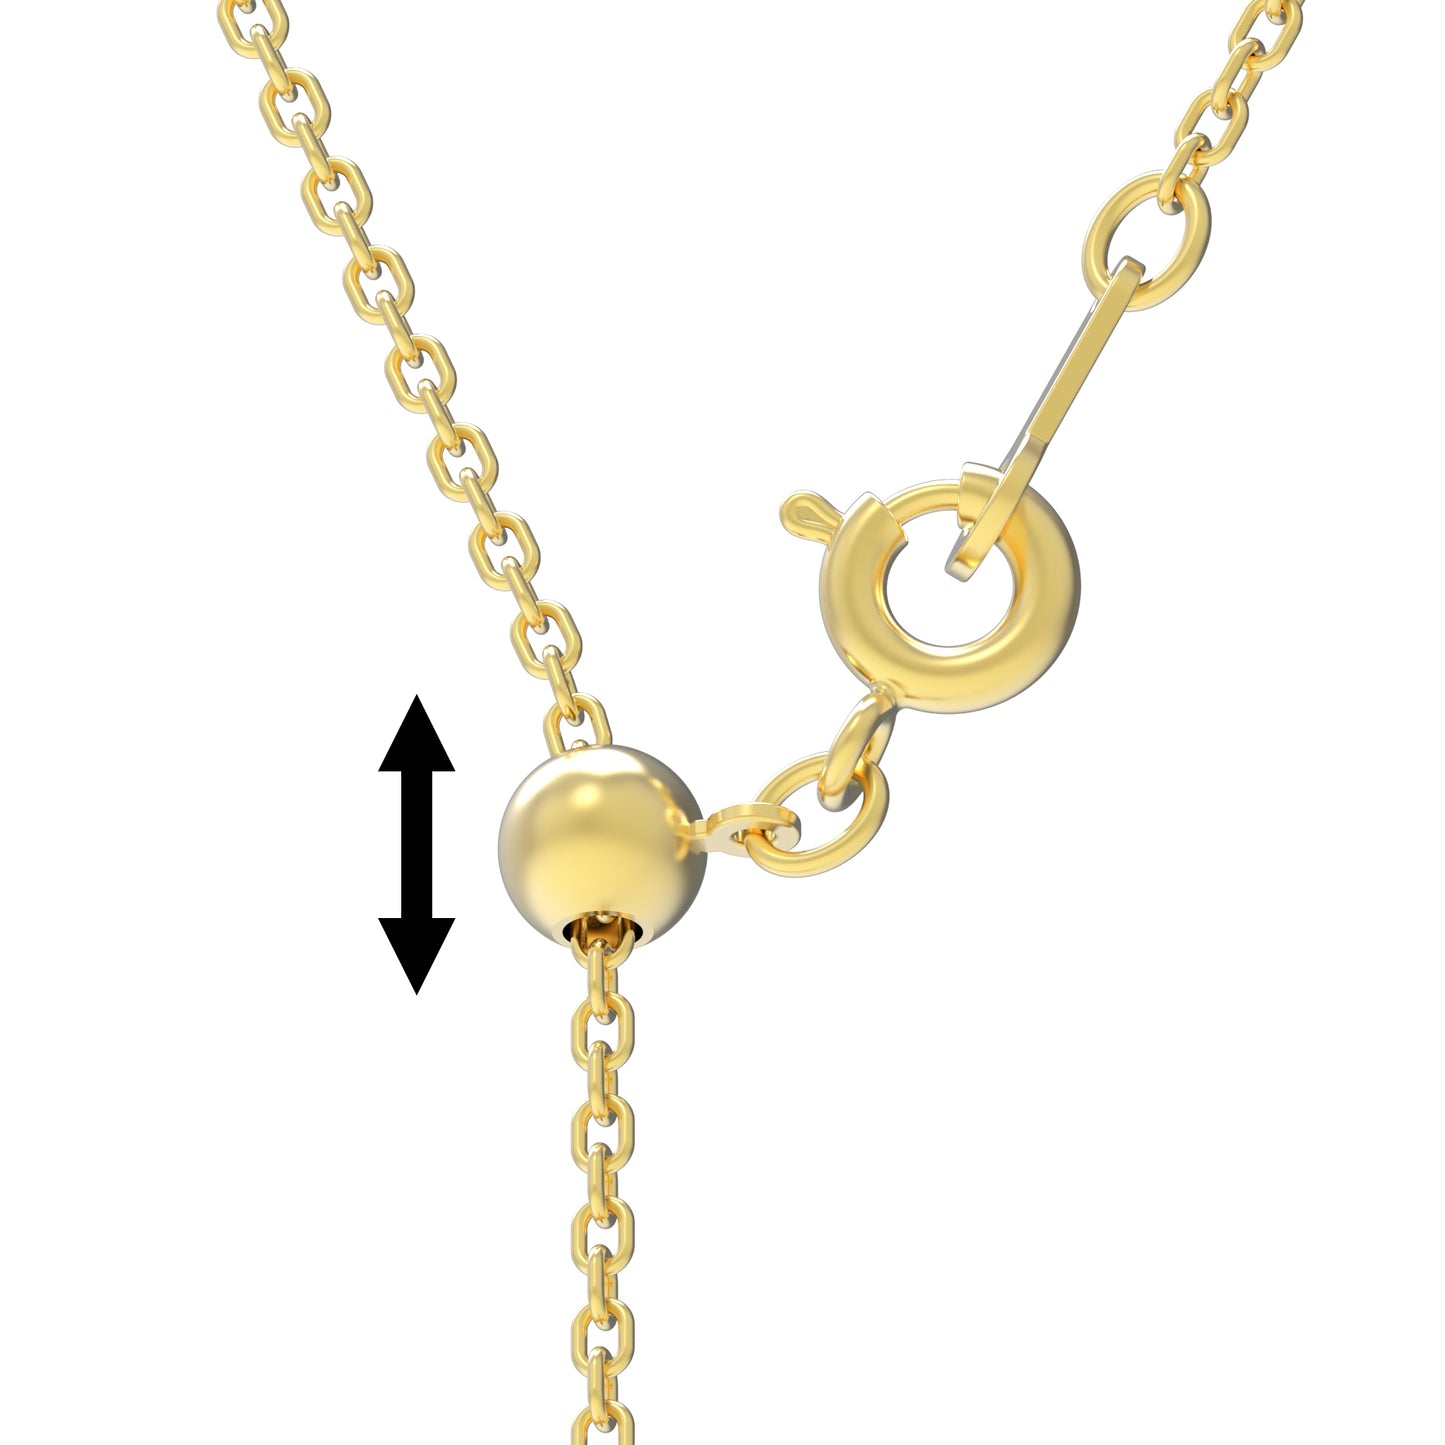 Erwin's pendant：GOLD